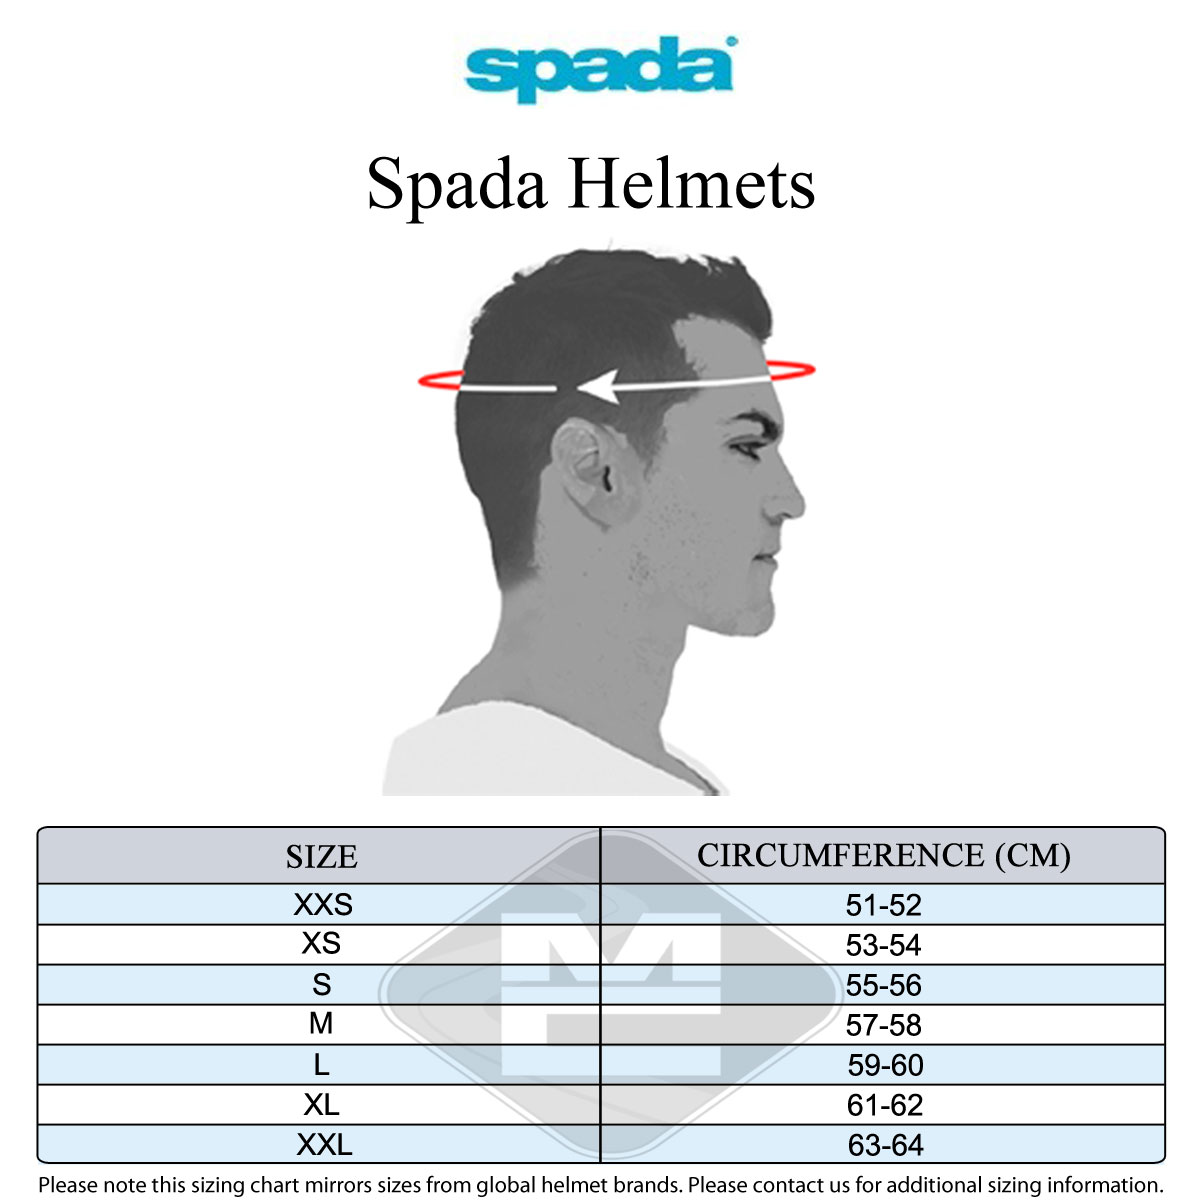 Spada Men's Size Guide